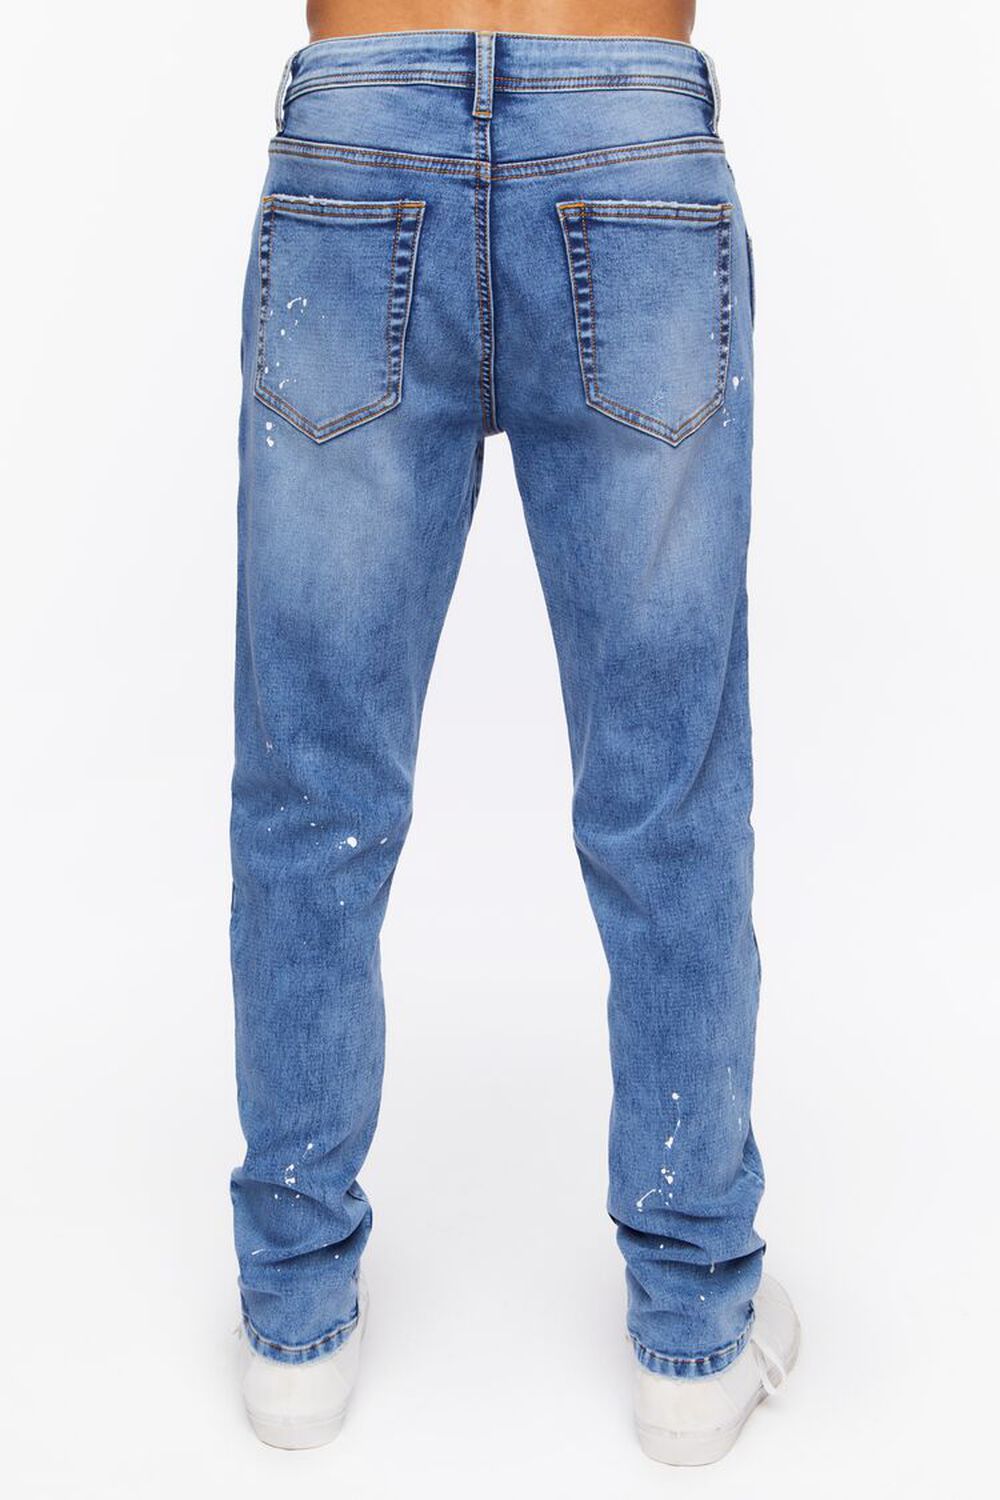 MEDIUM DENIM Seamed Paint Splatter Slim-Fit Jeans, image 3